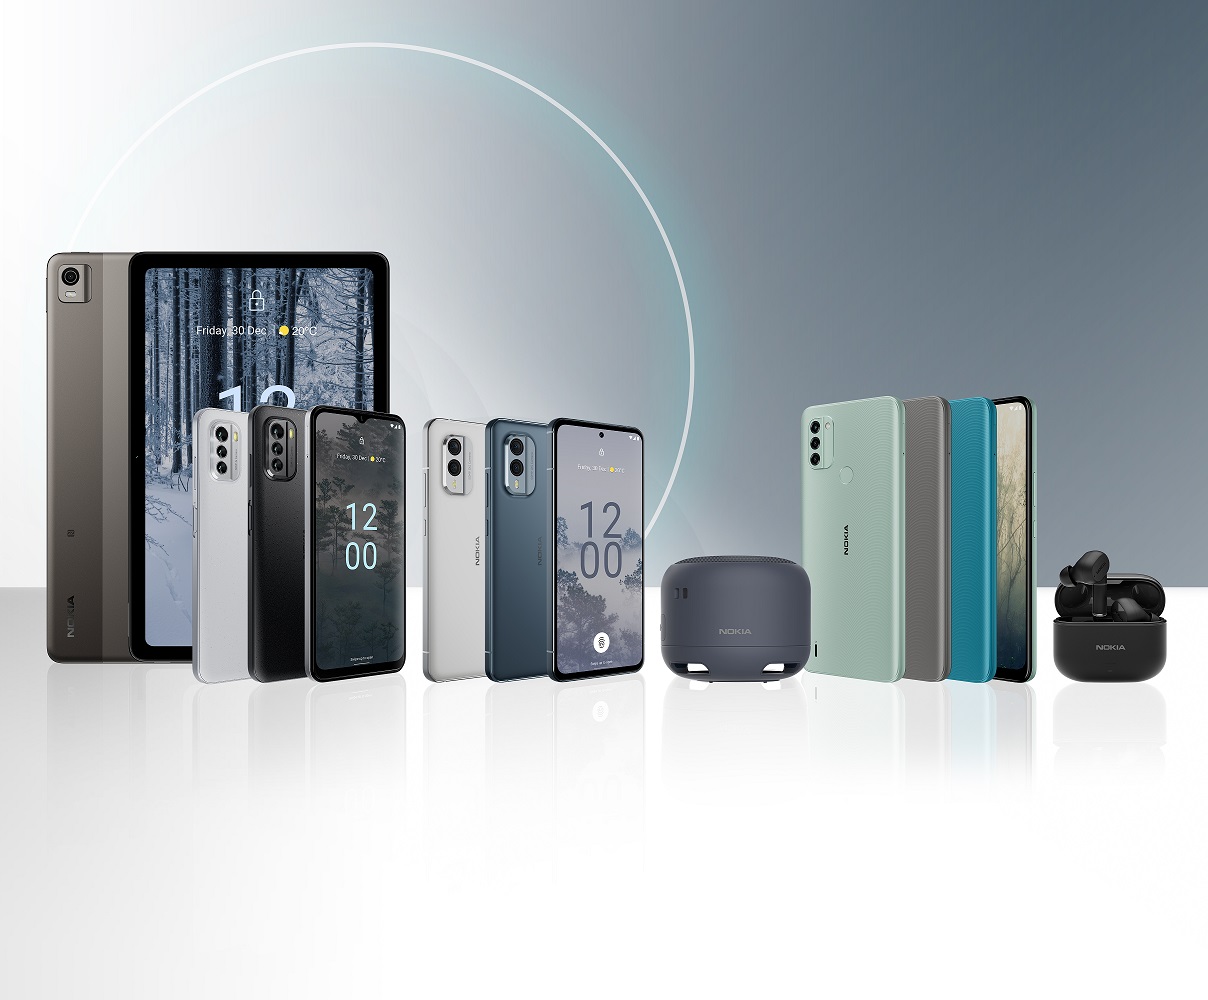 Nokia Announces 4 New Devices!